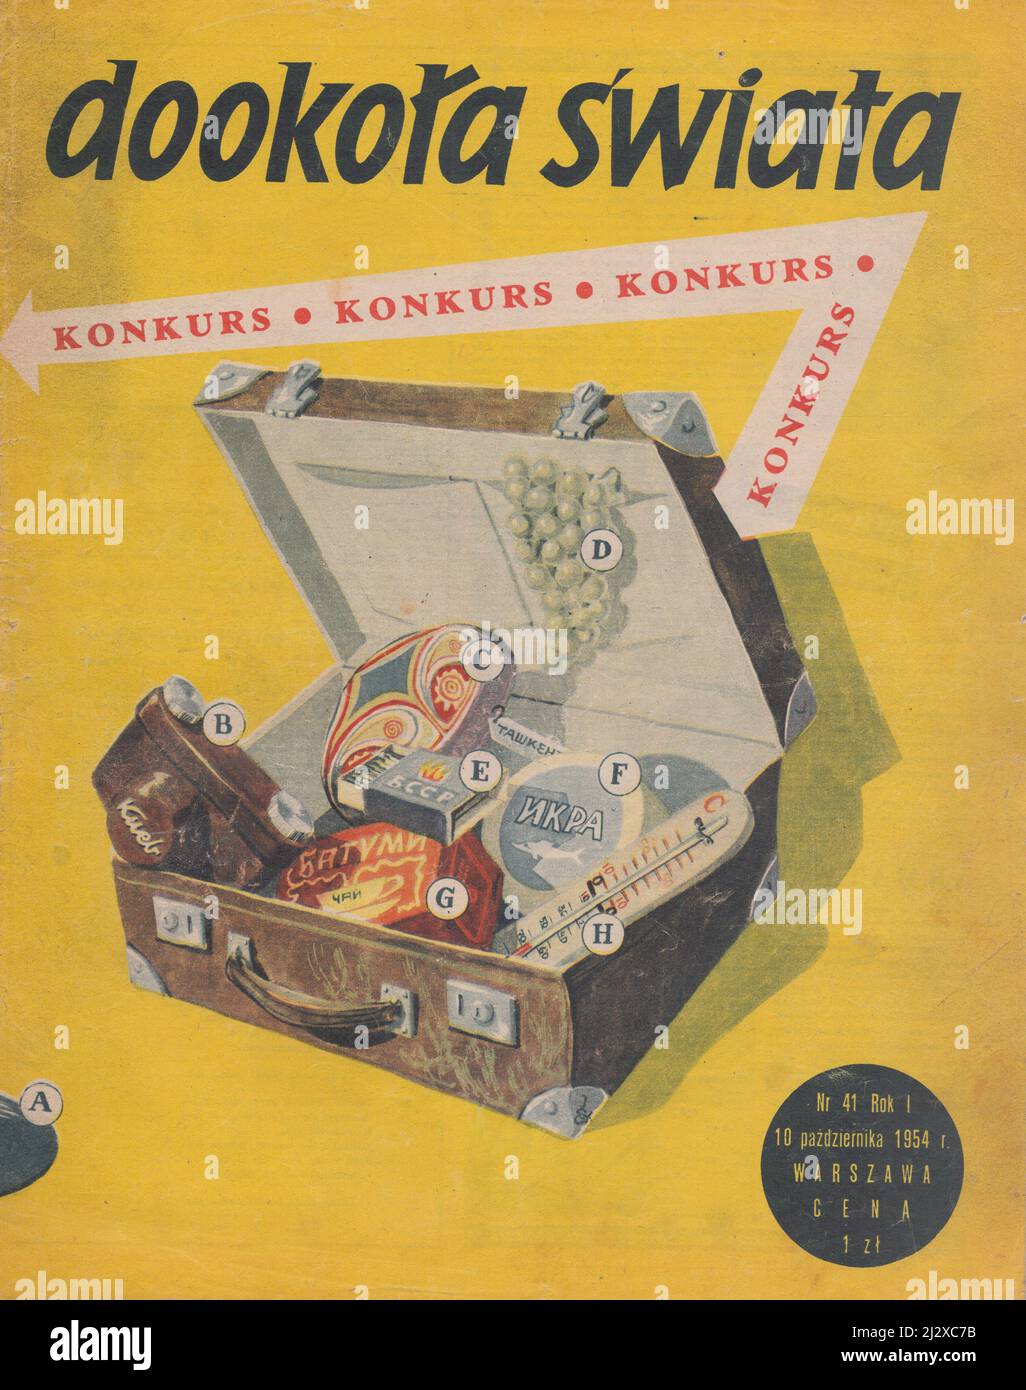 Dookola swiata okladka pierwsza strona czasopismo polskie front cover of polish magazine around the world 1962 Stock Photo